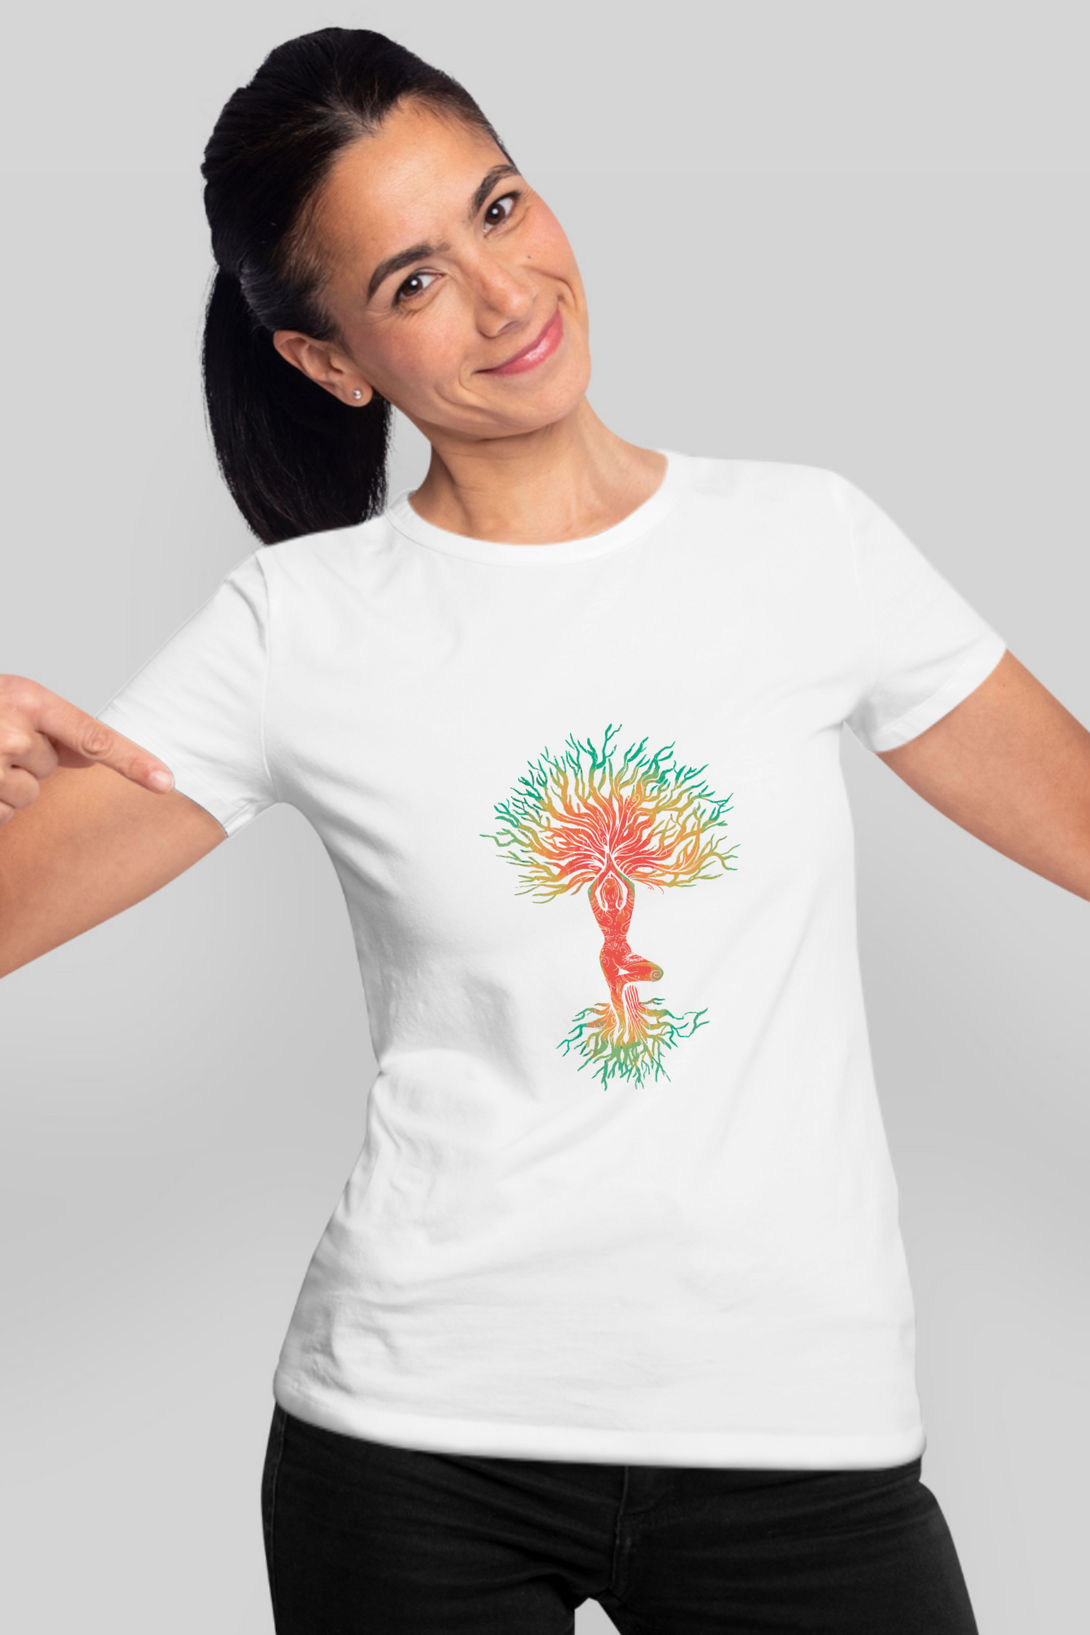 Yoga Tree Printed T-Shirt For Women - WowWaves - 12